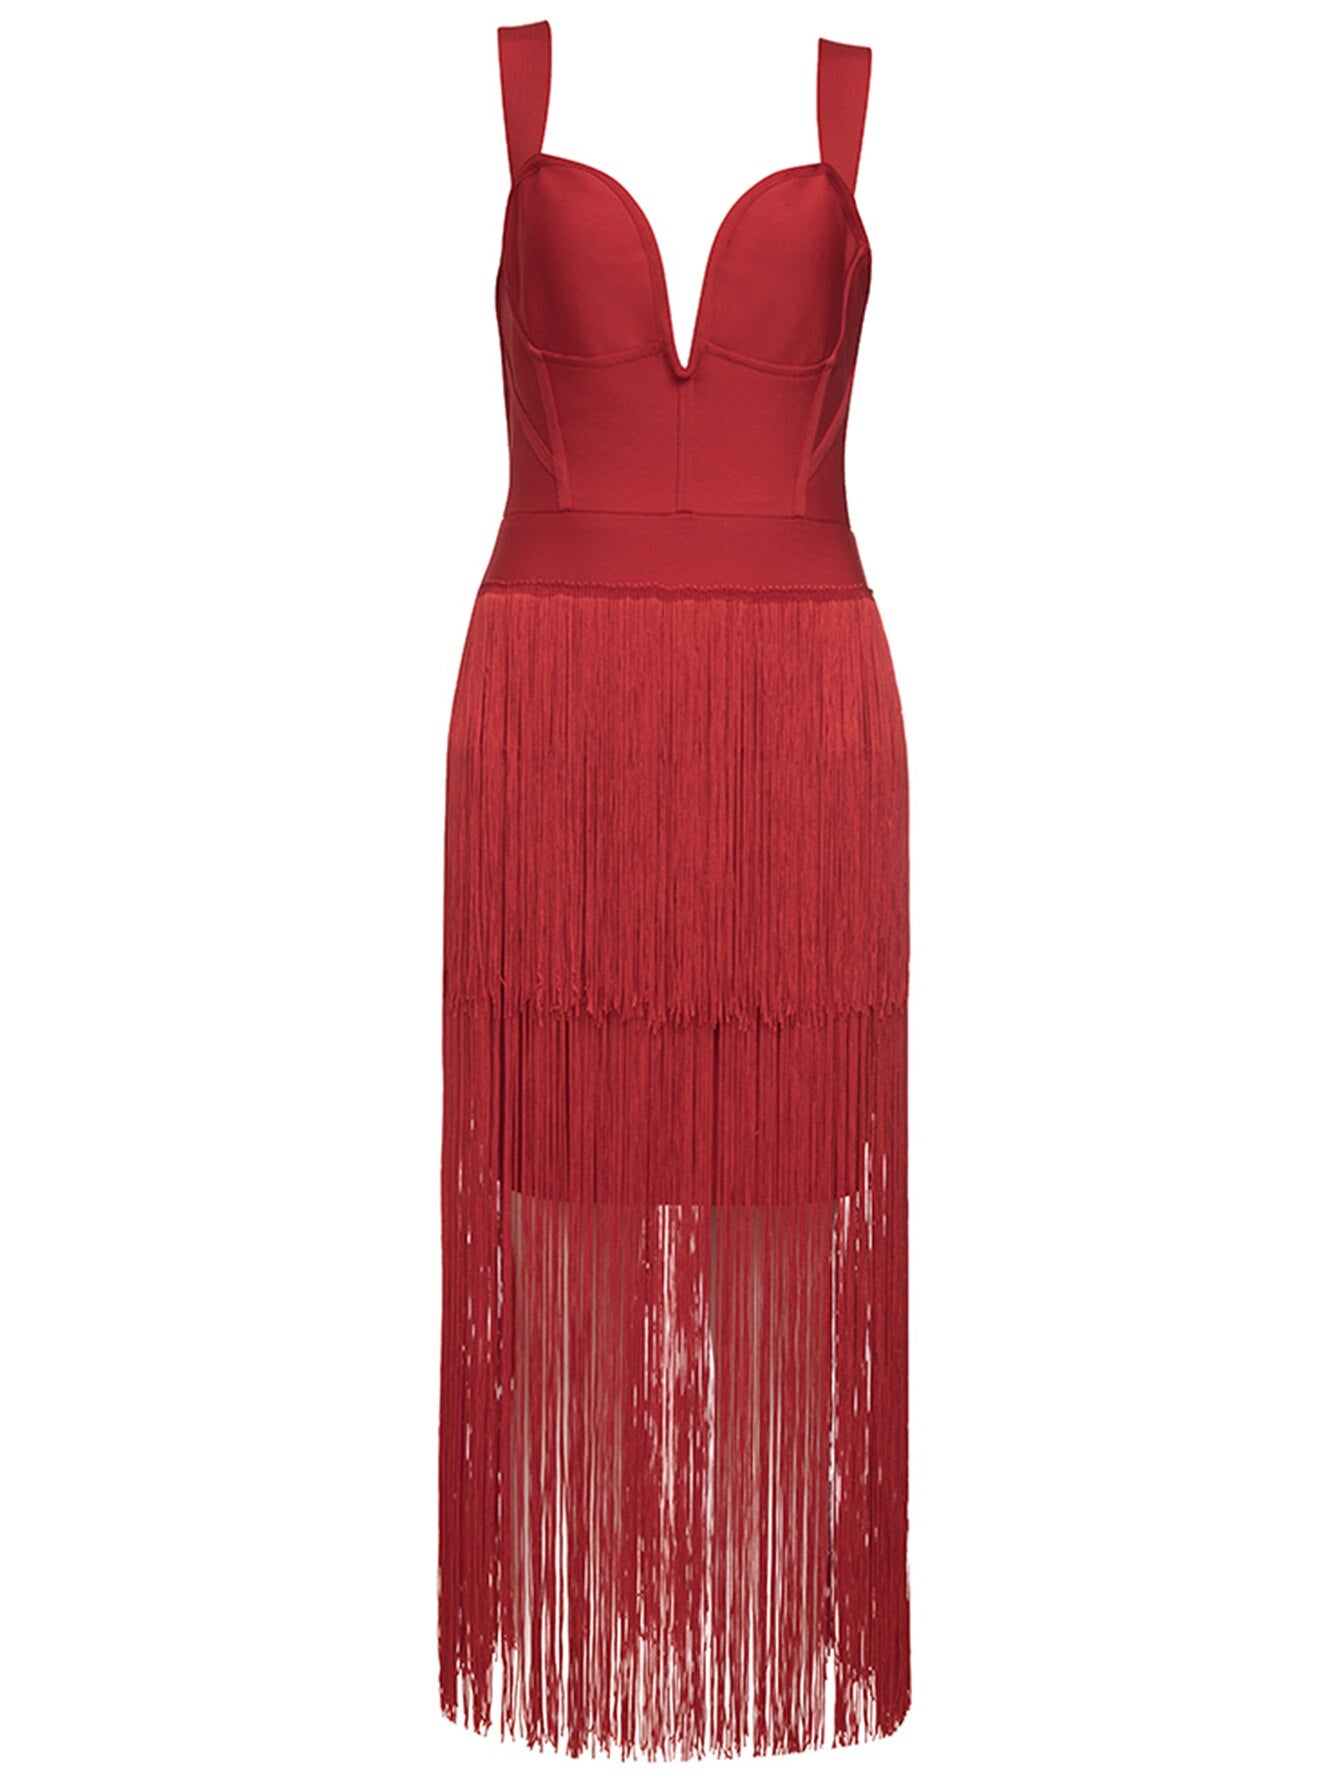 CONSTANCE Red Tassel Bandage Dress - Veloristore